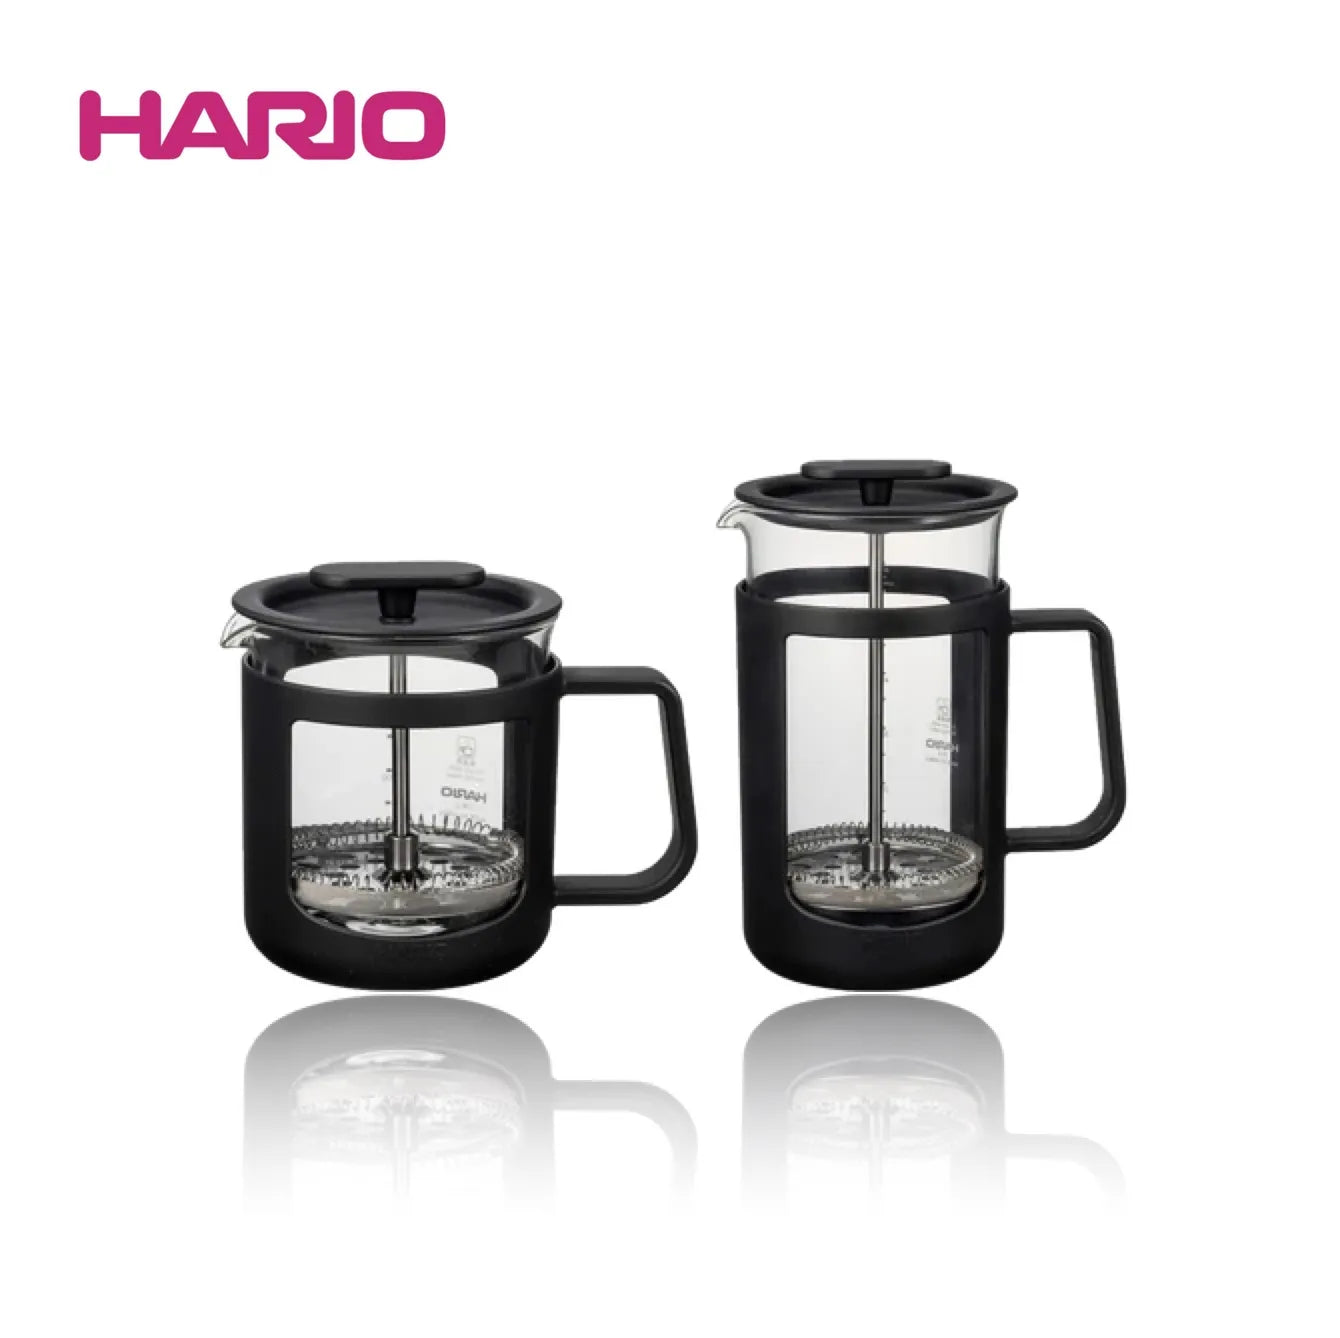 Hario's Coffee Making Tools